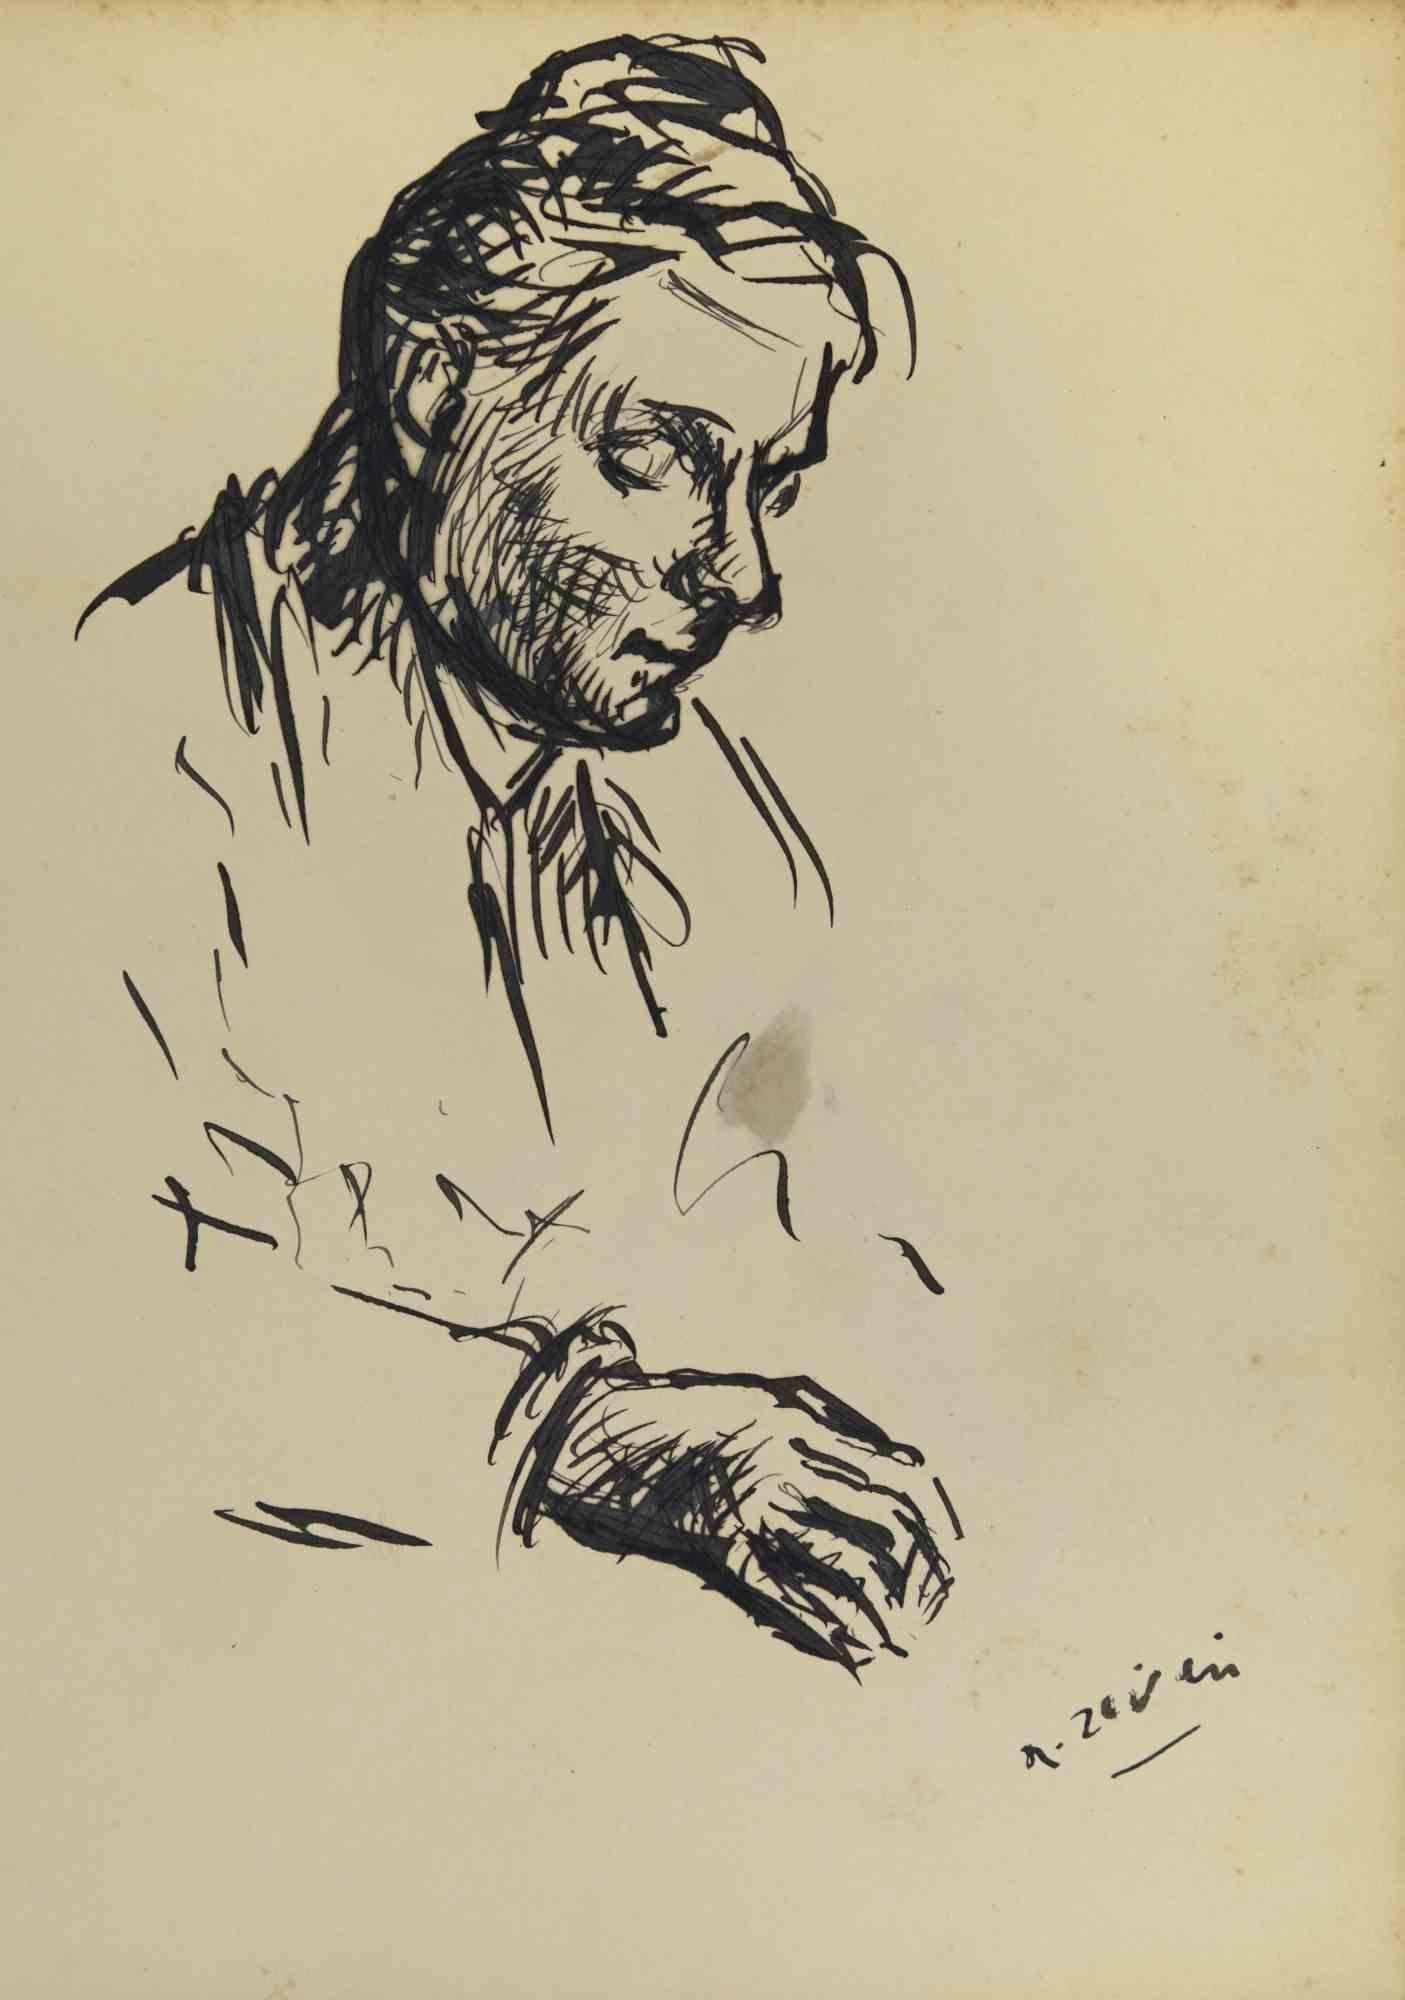 Portrait - Drawing by Alberto Ziveri - 1930s